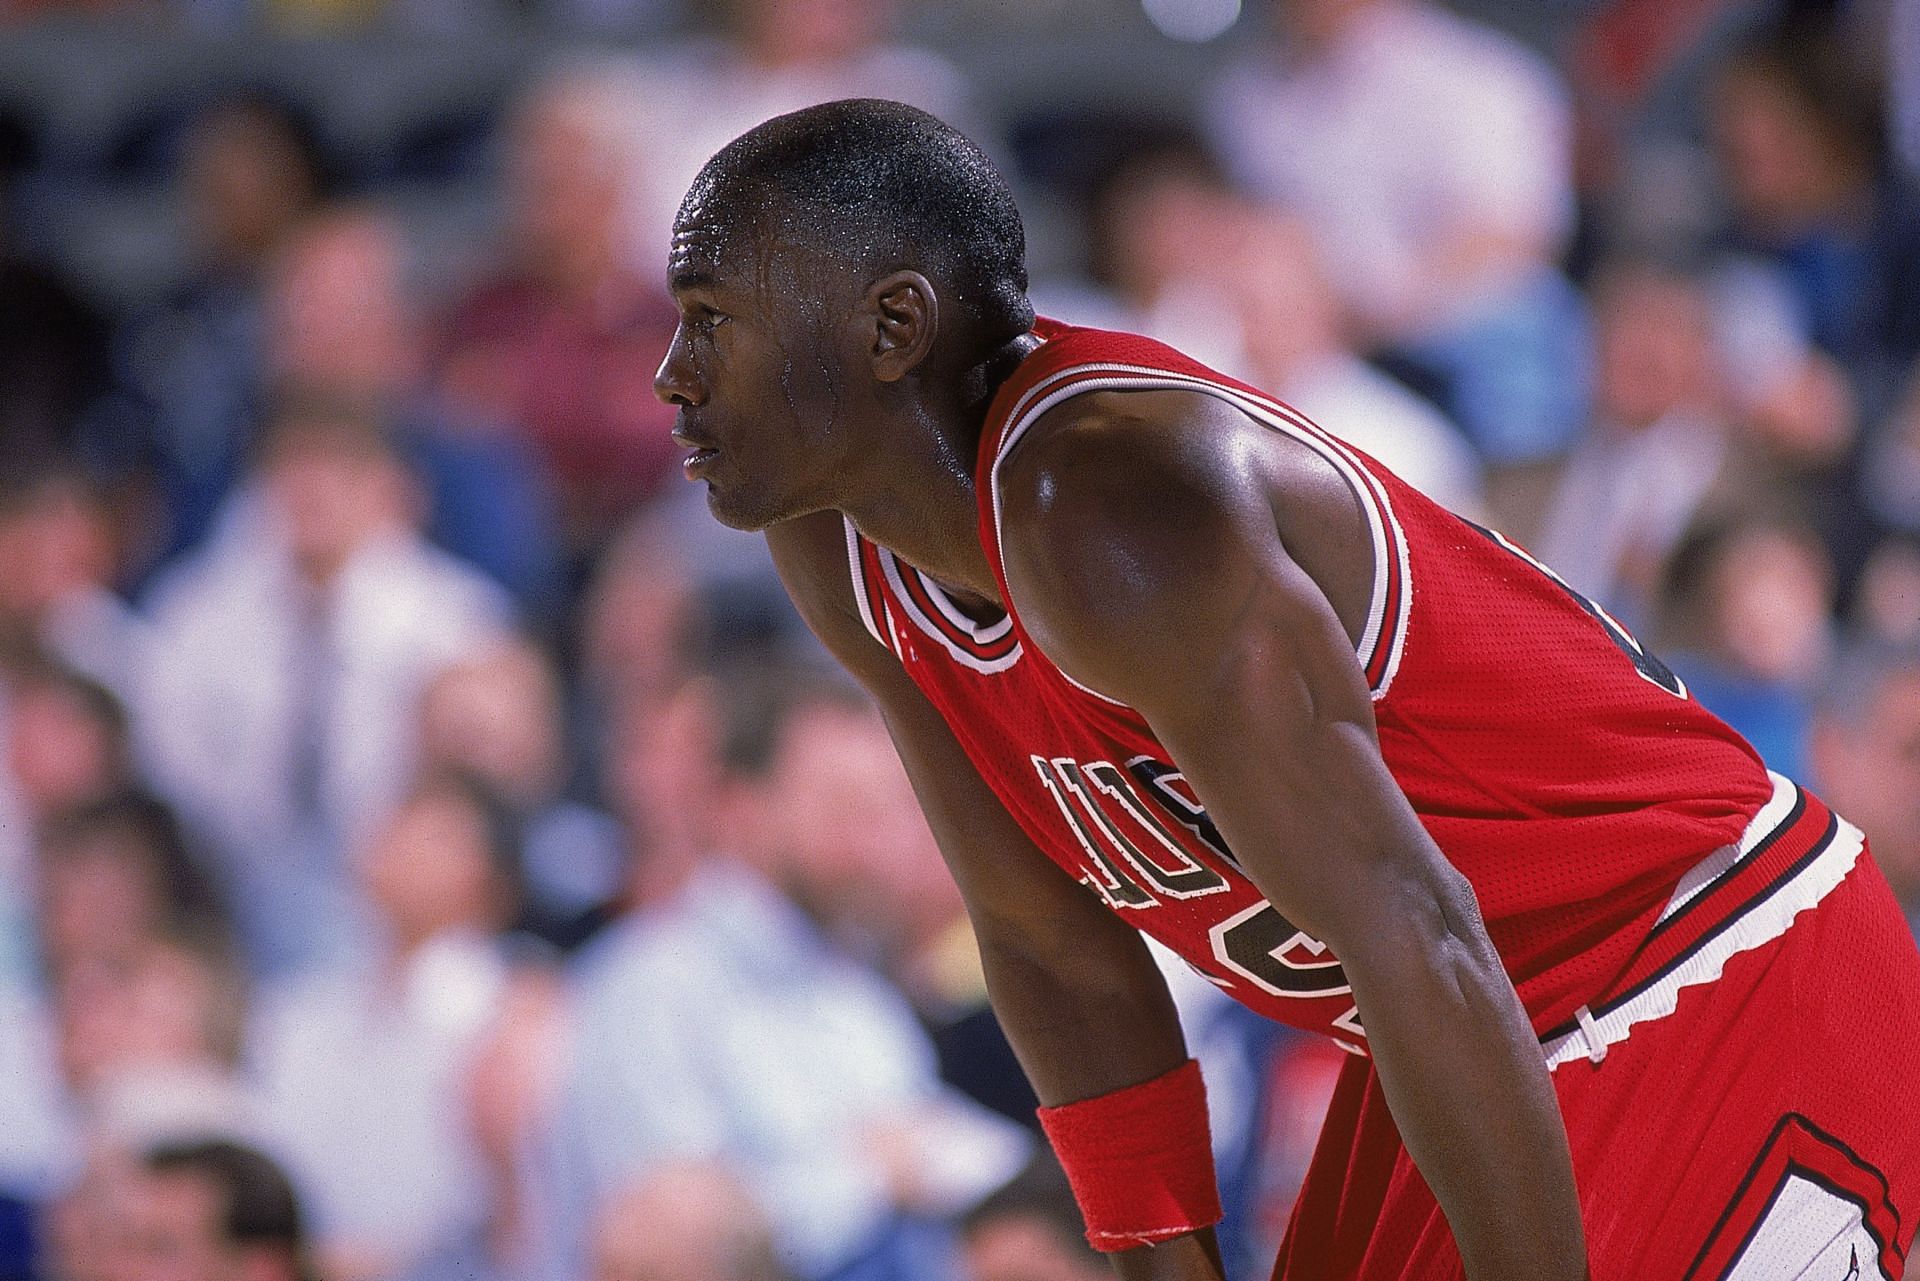 1993 Michael Jordan Retirement Newspaper. Chicago Bulls Basketball